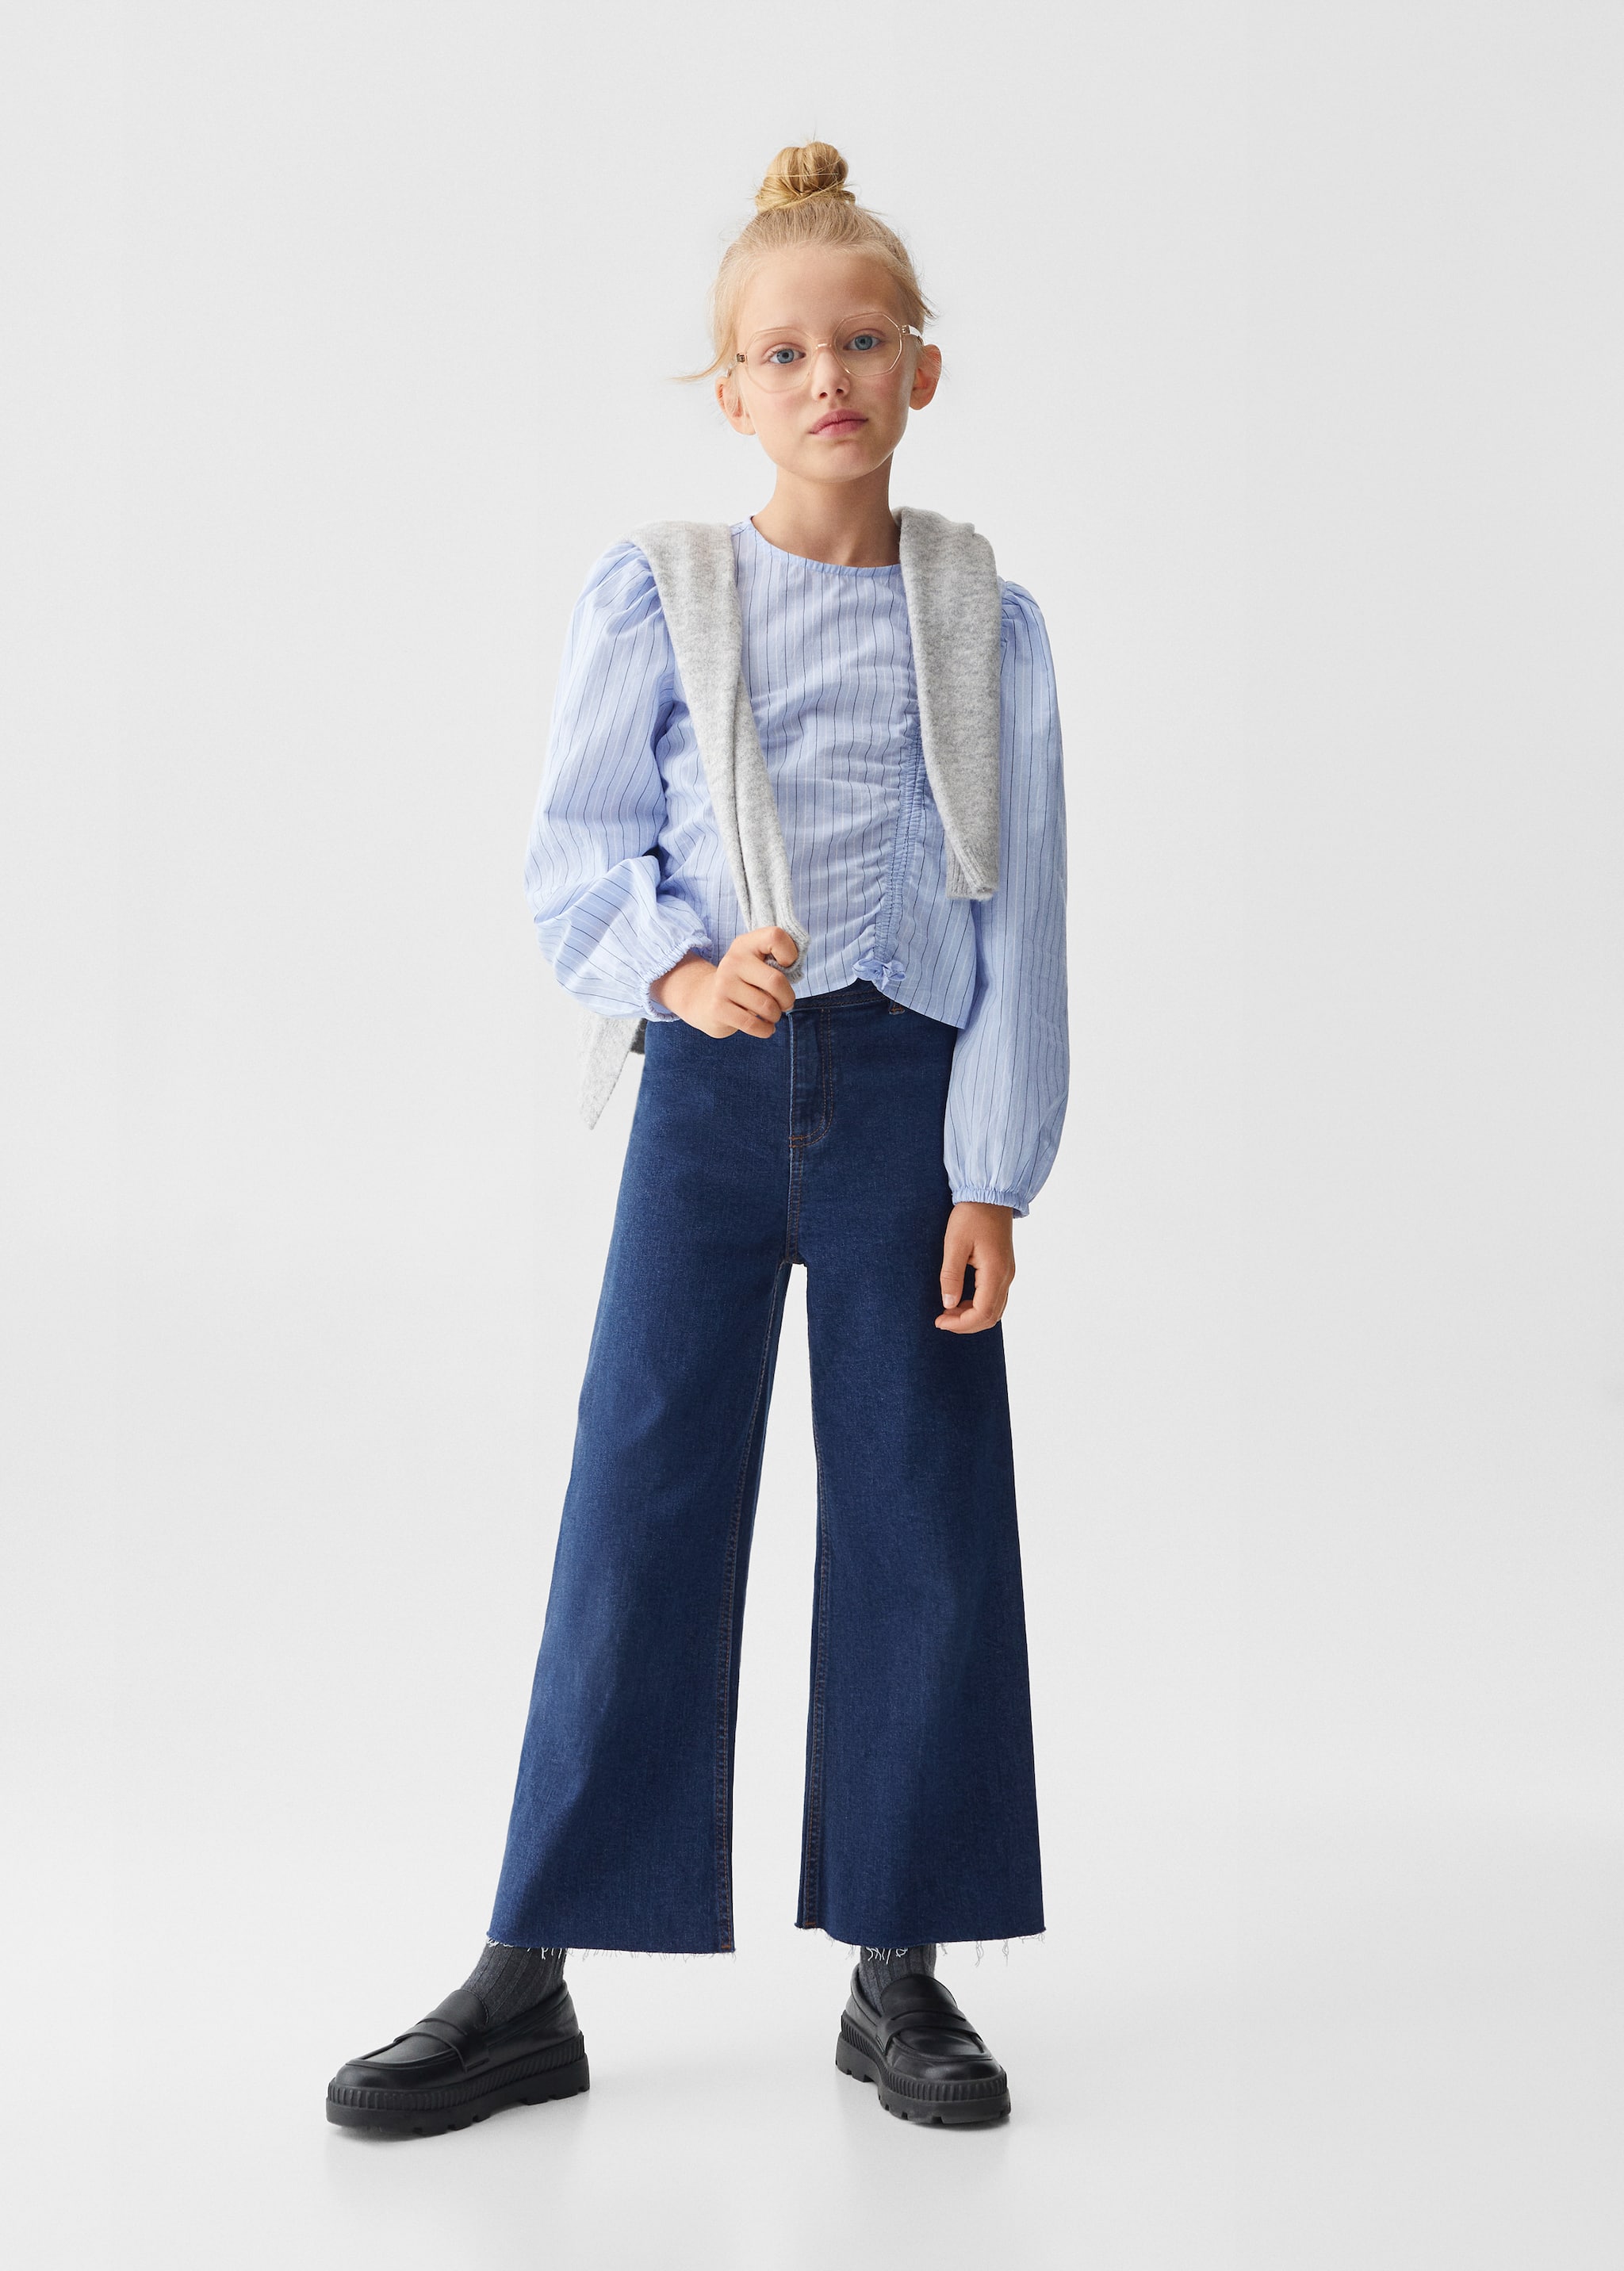 Jeans culotte high waist - General plane